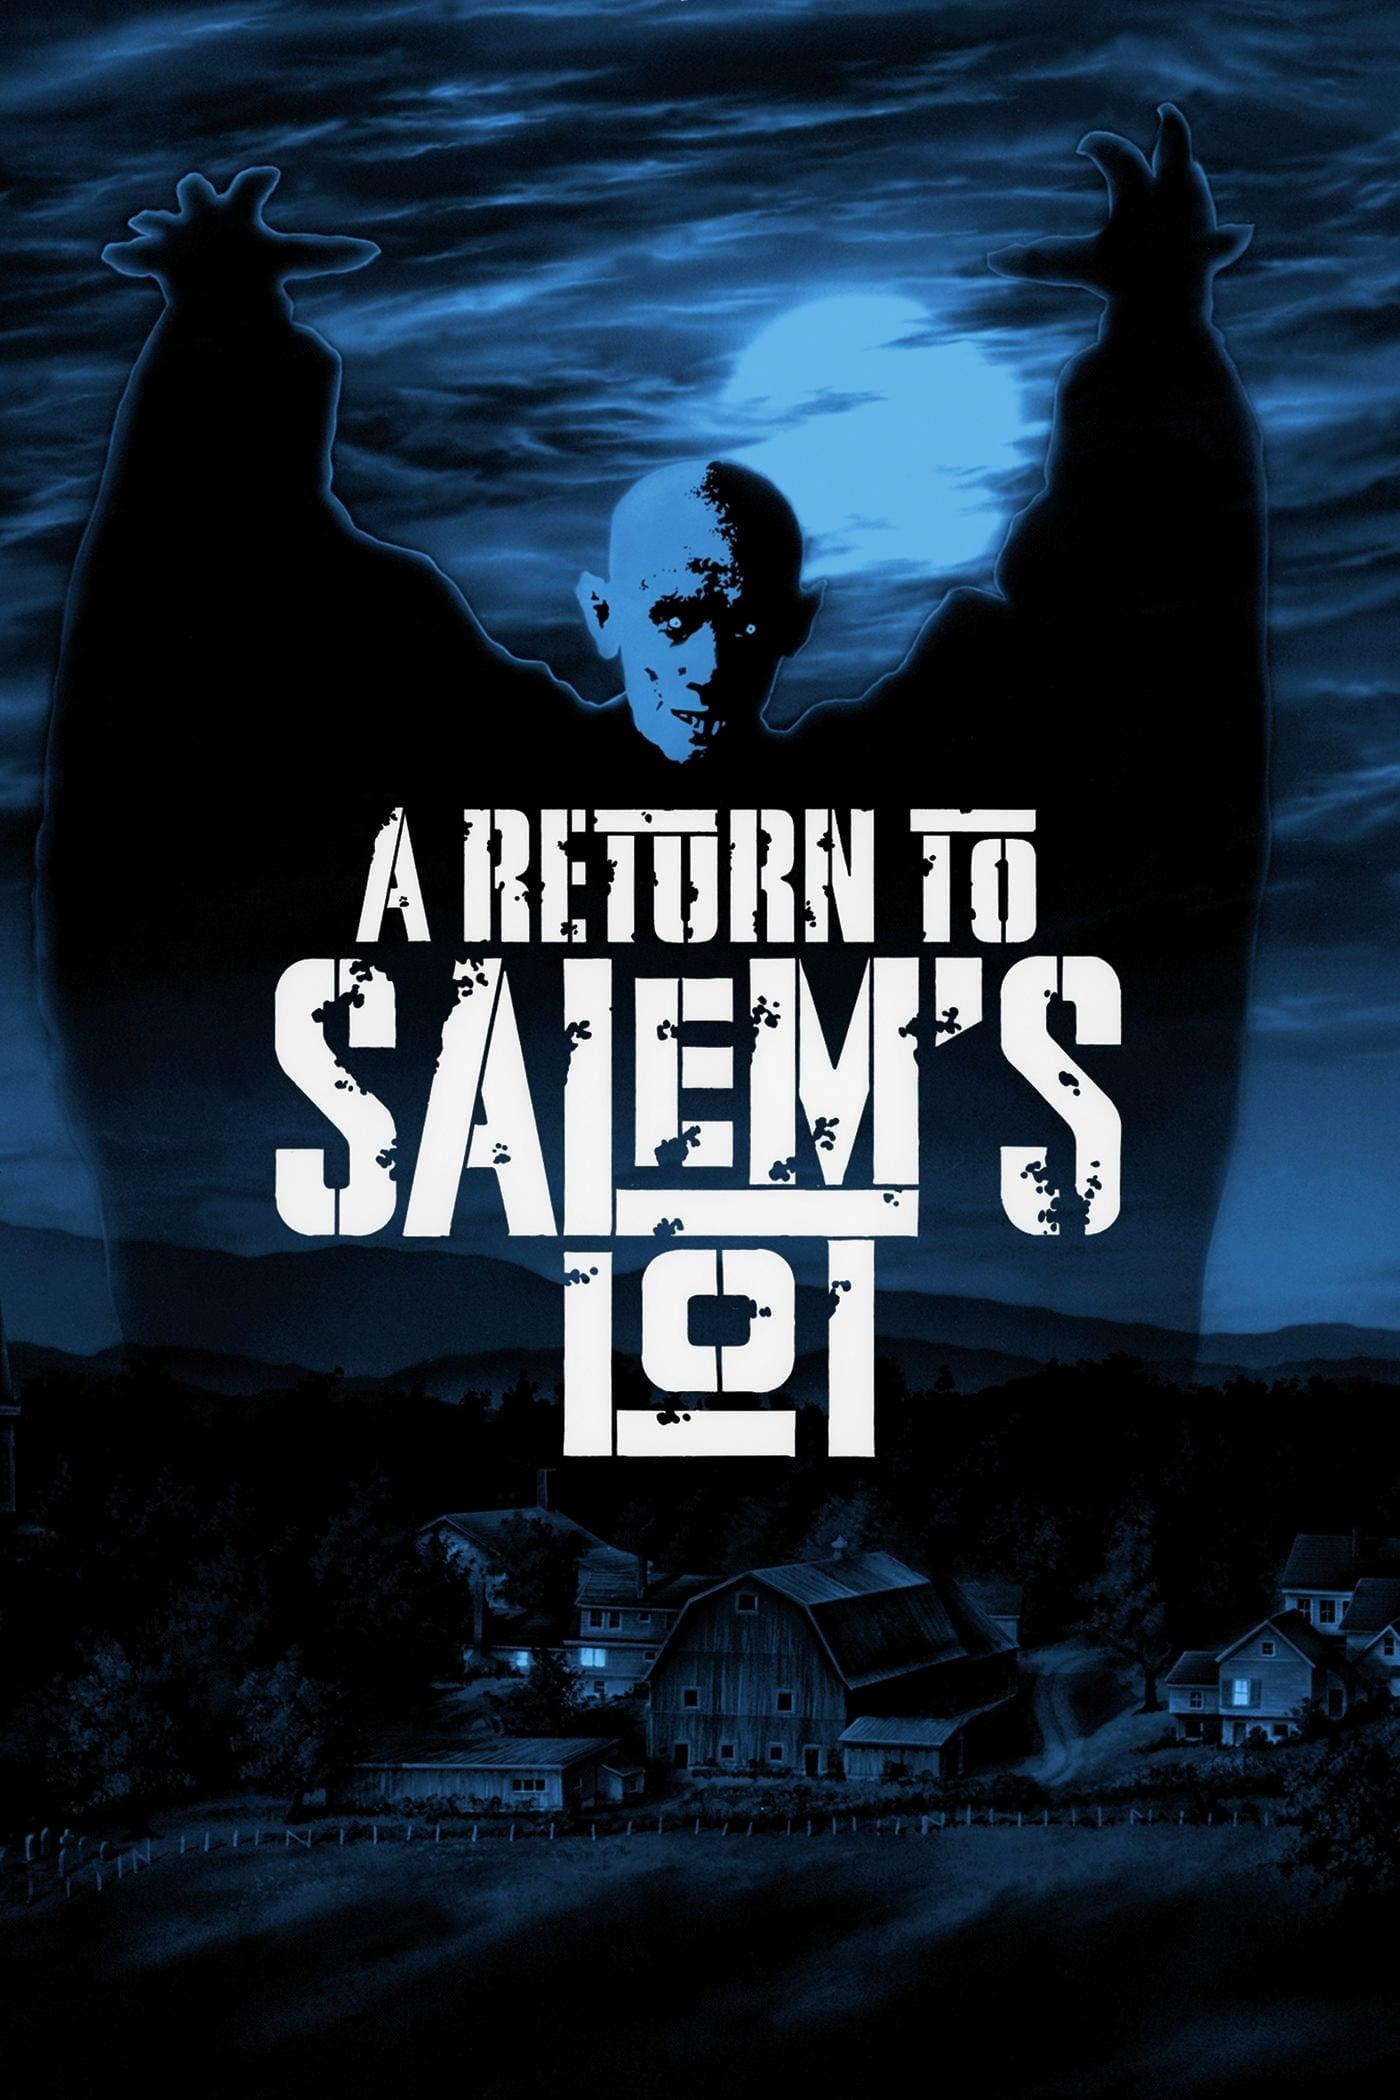 A Return to Salem's Lot poster